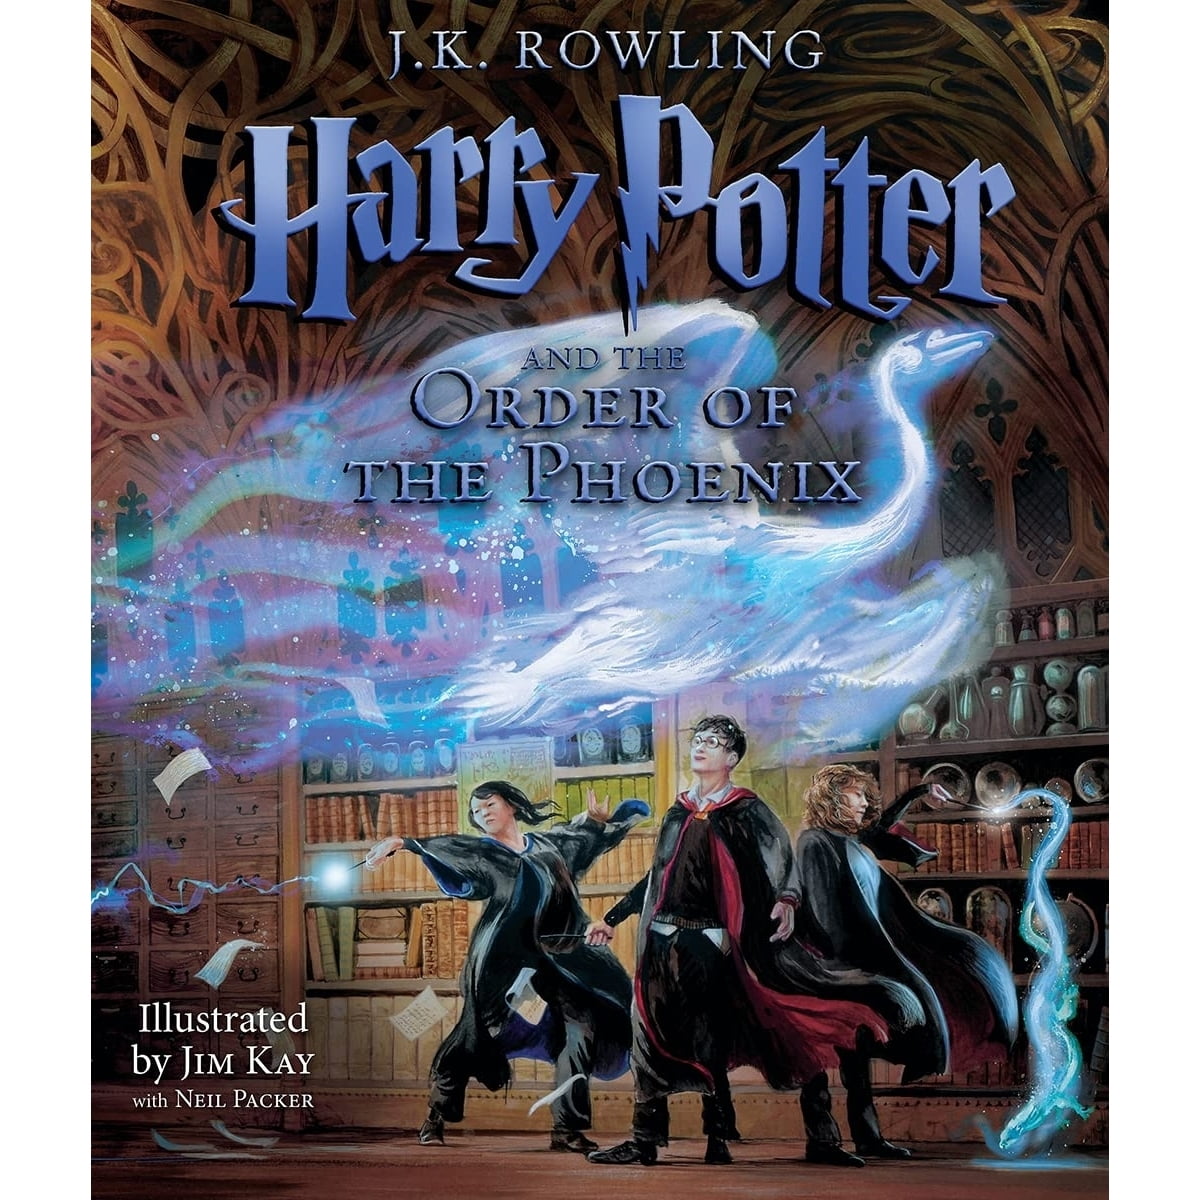 Harry Potter journal book of wizard magic book, phoenix, Potter vintage book